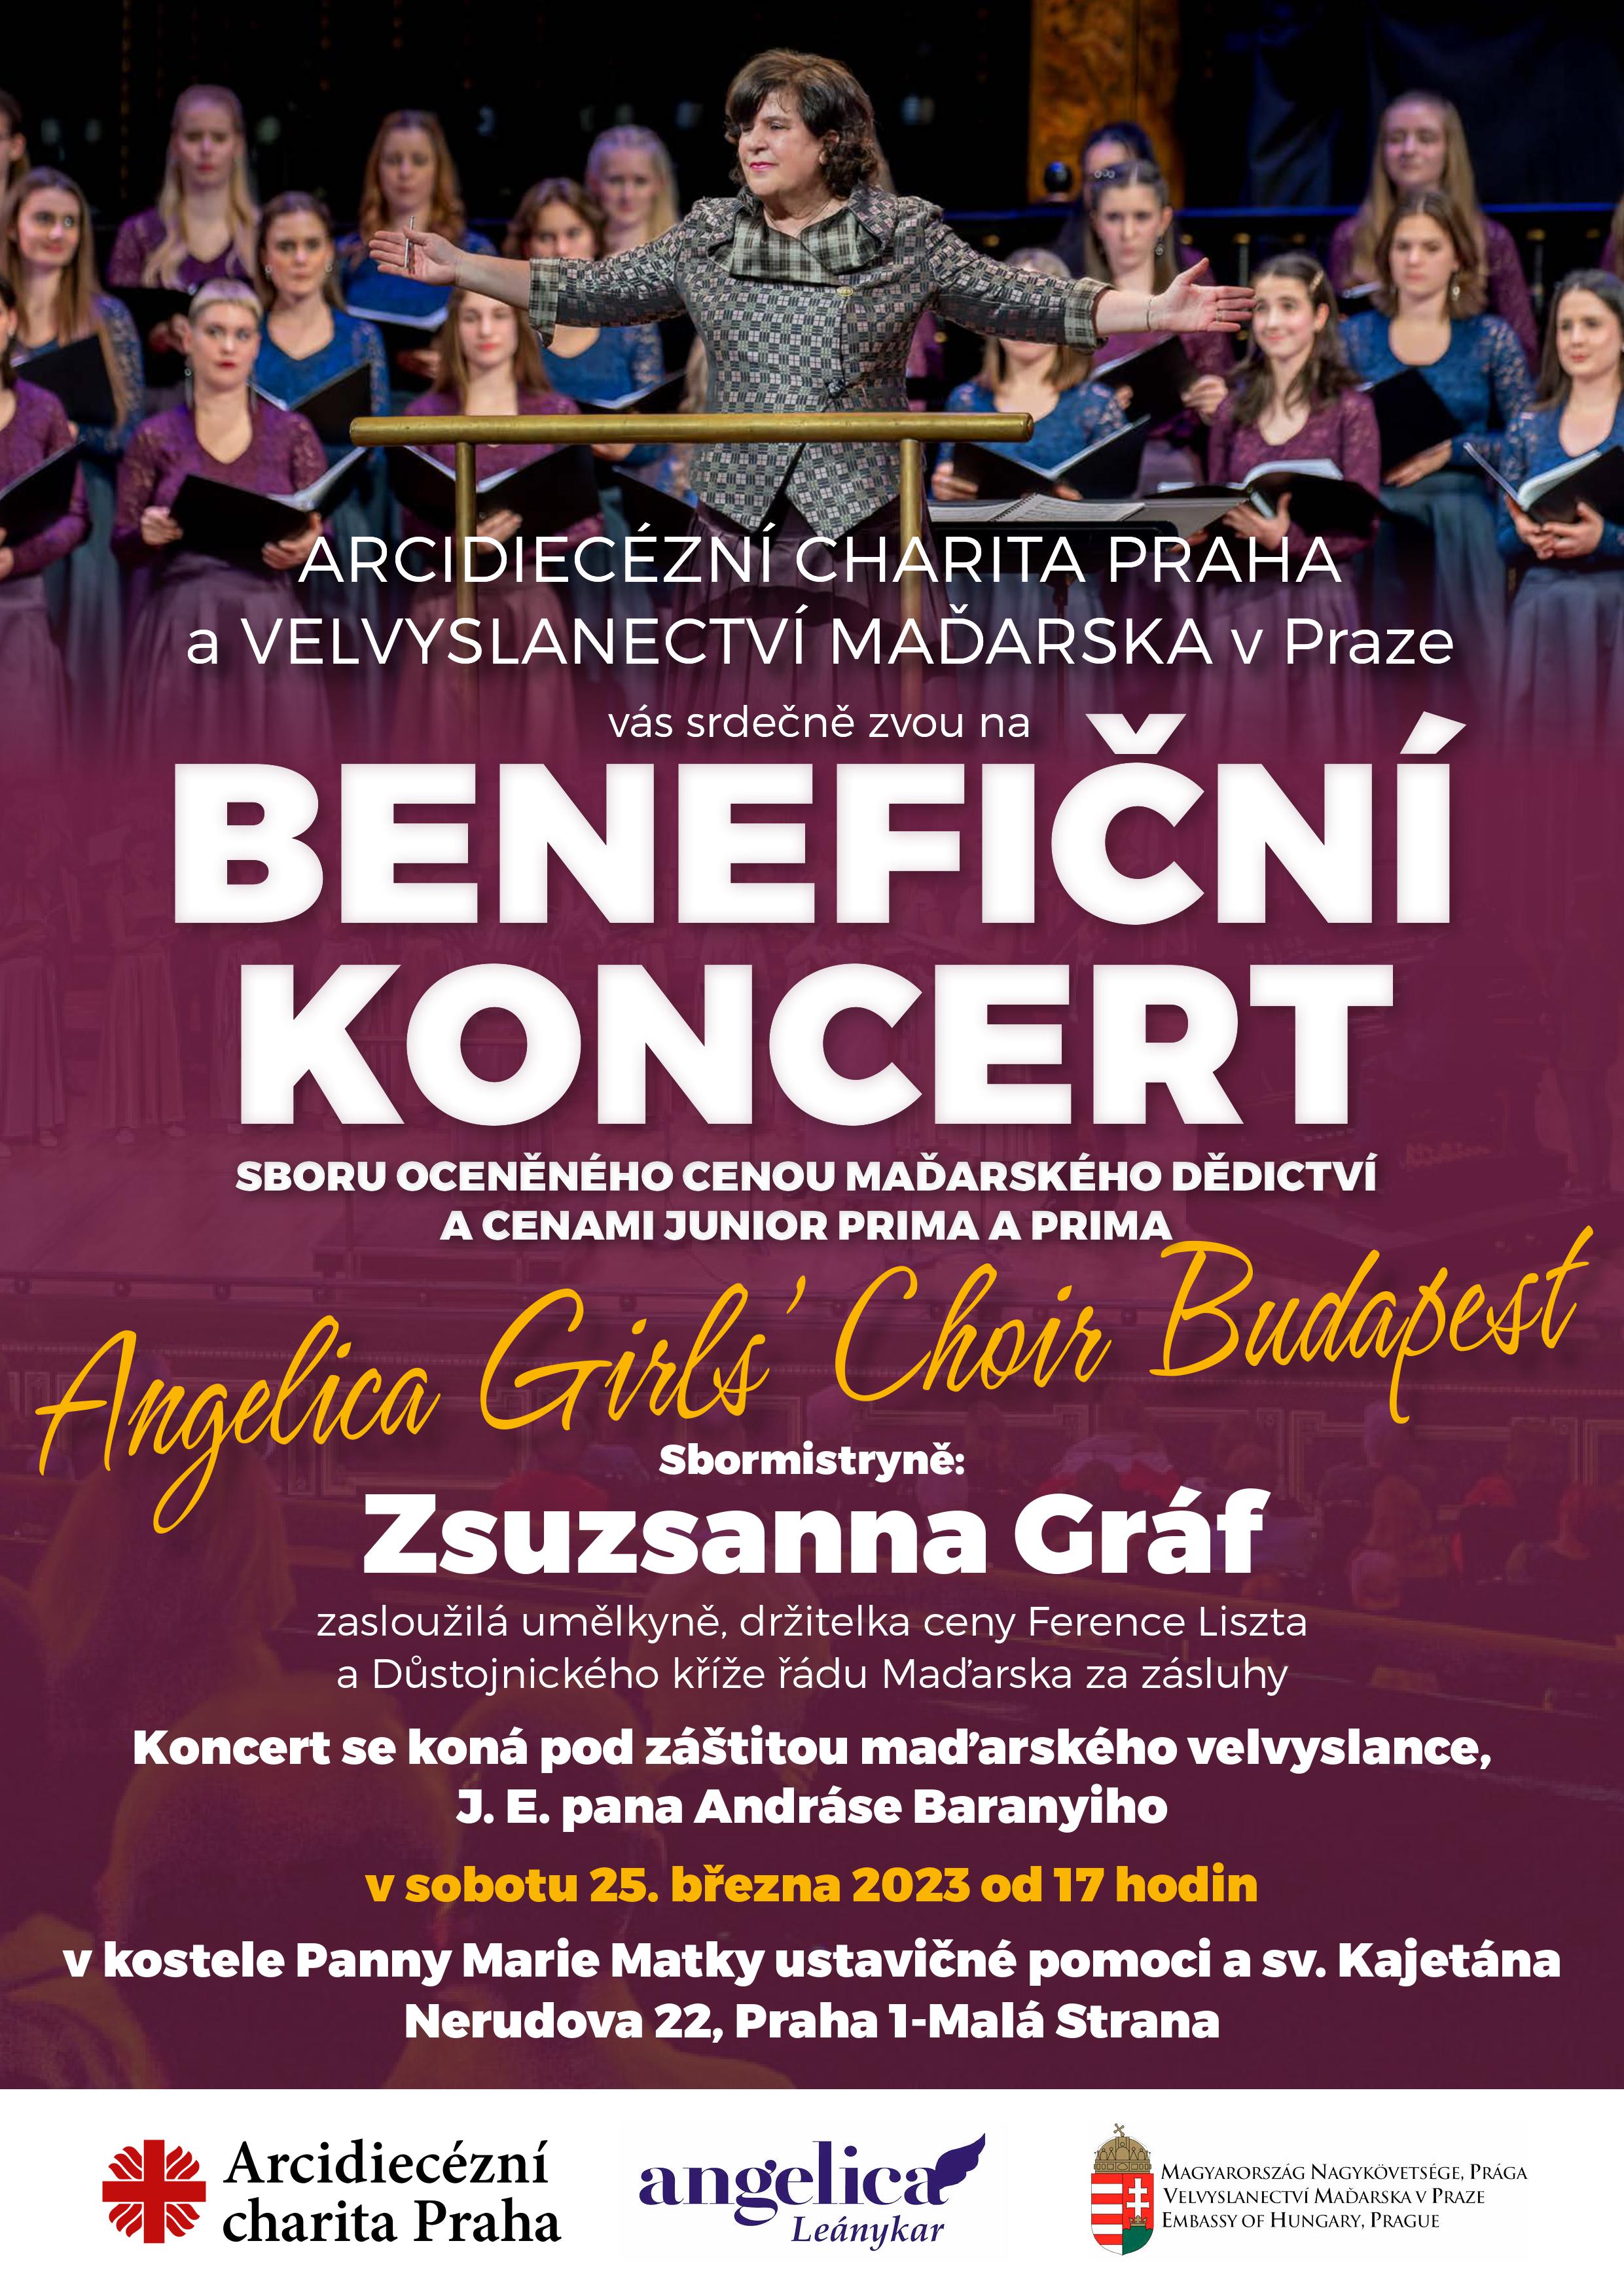 Angelica_Girls_Choir_Budapest.jpg